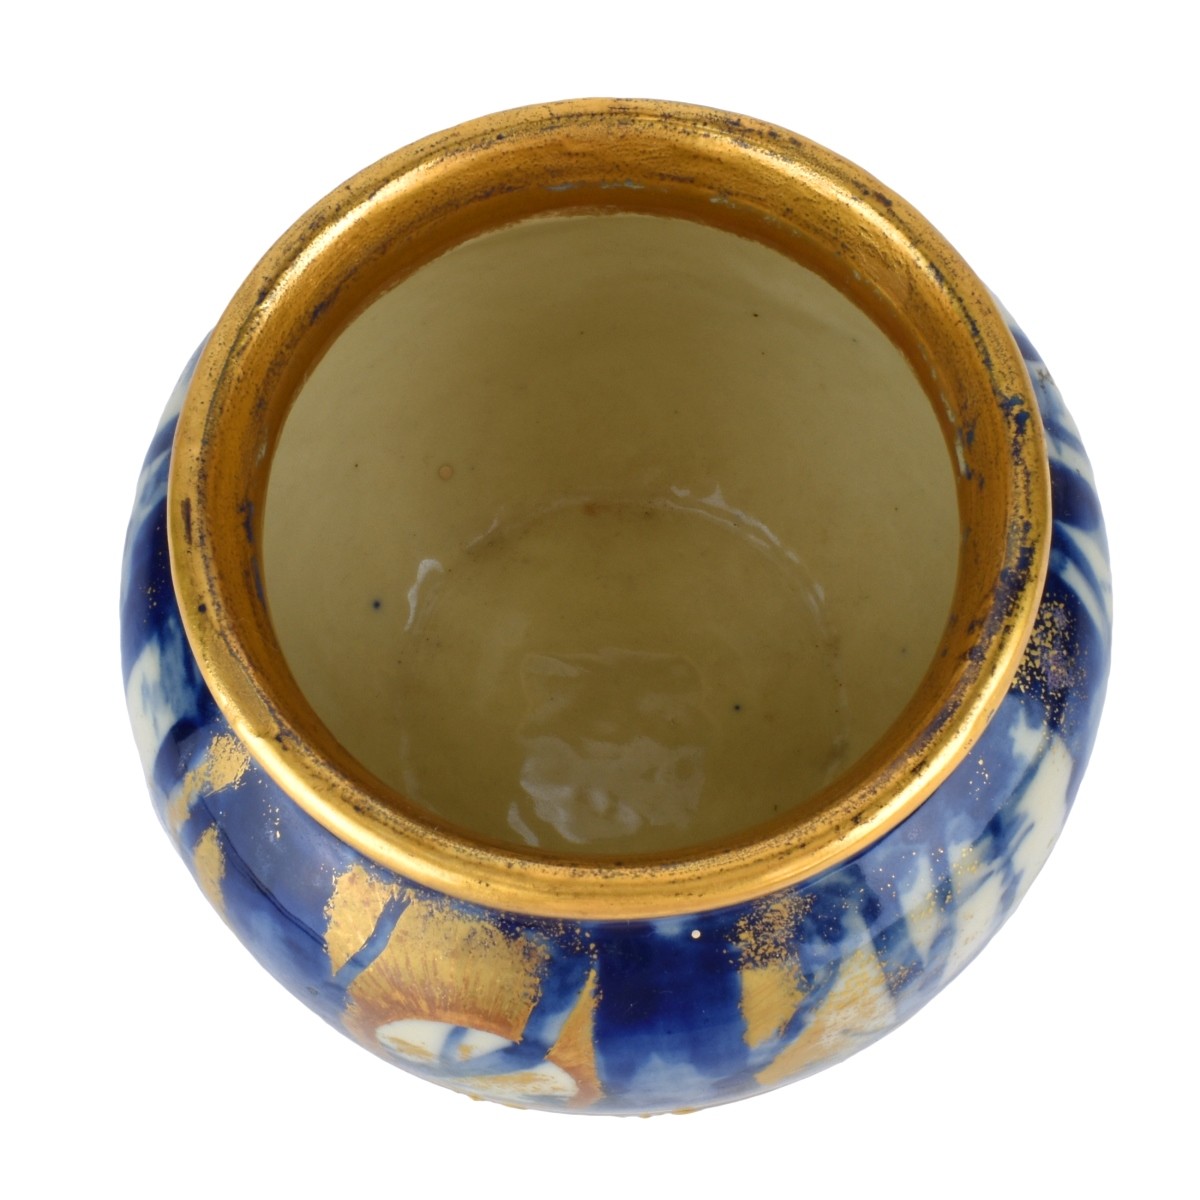 Turn Teplitz Amphora Bowl